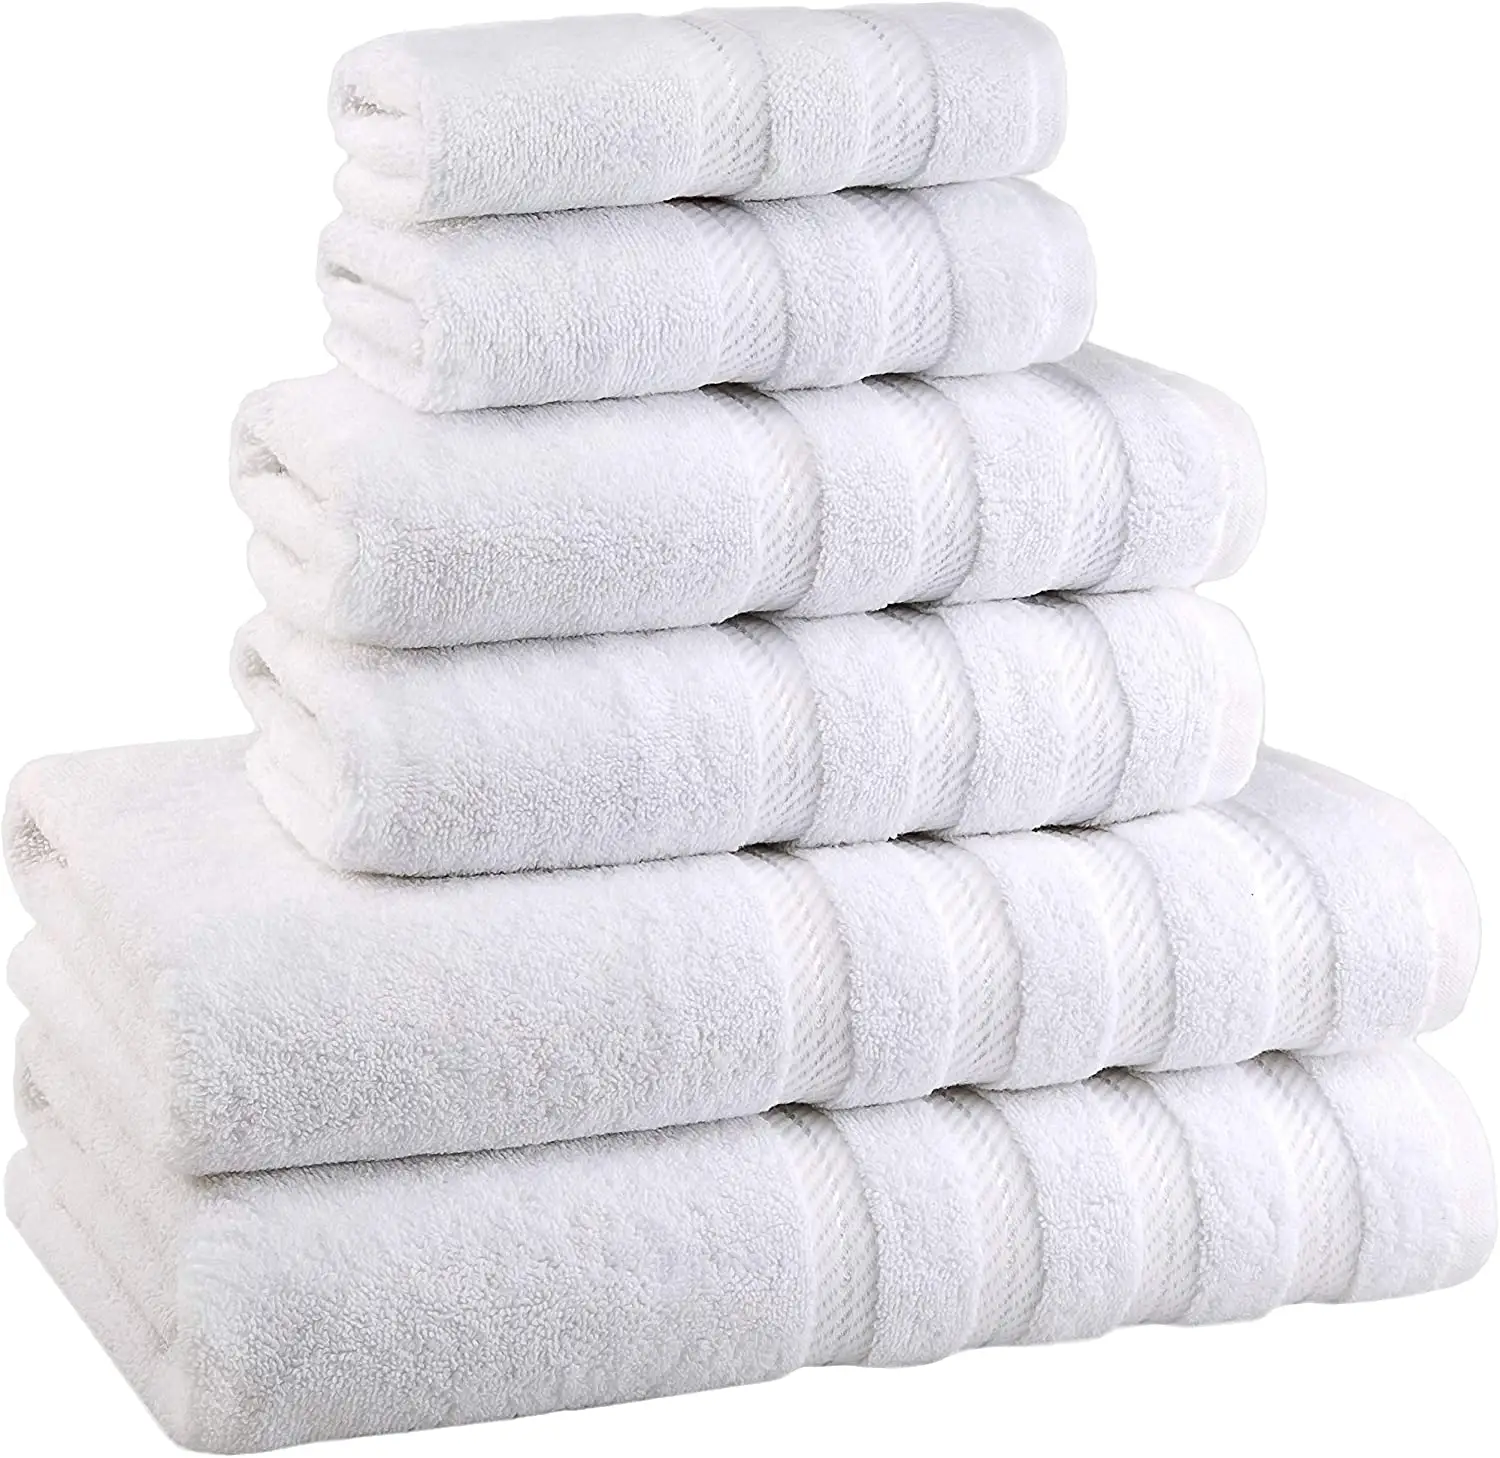 SENQI Highly Absorbent 100% Cotton 2 Bath Towels 2 Hand Towels 2 Washcloths 6 Piece Dobby border Towel Set for bathroom shower